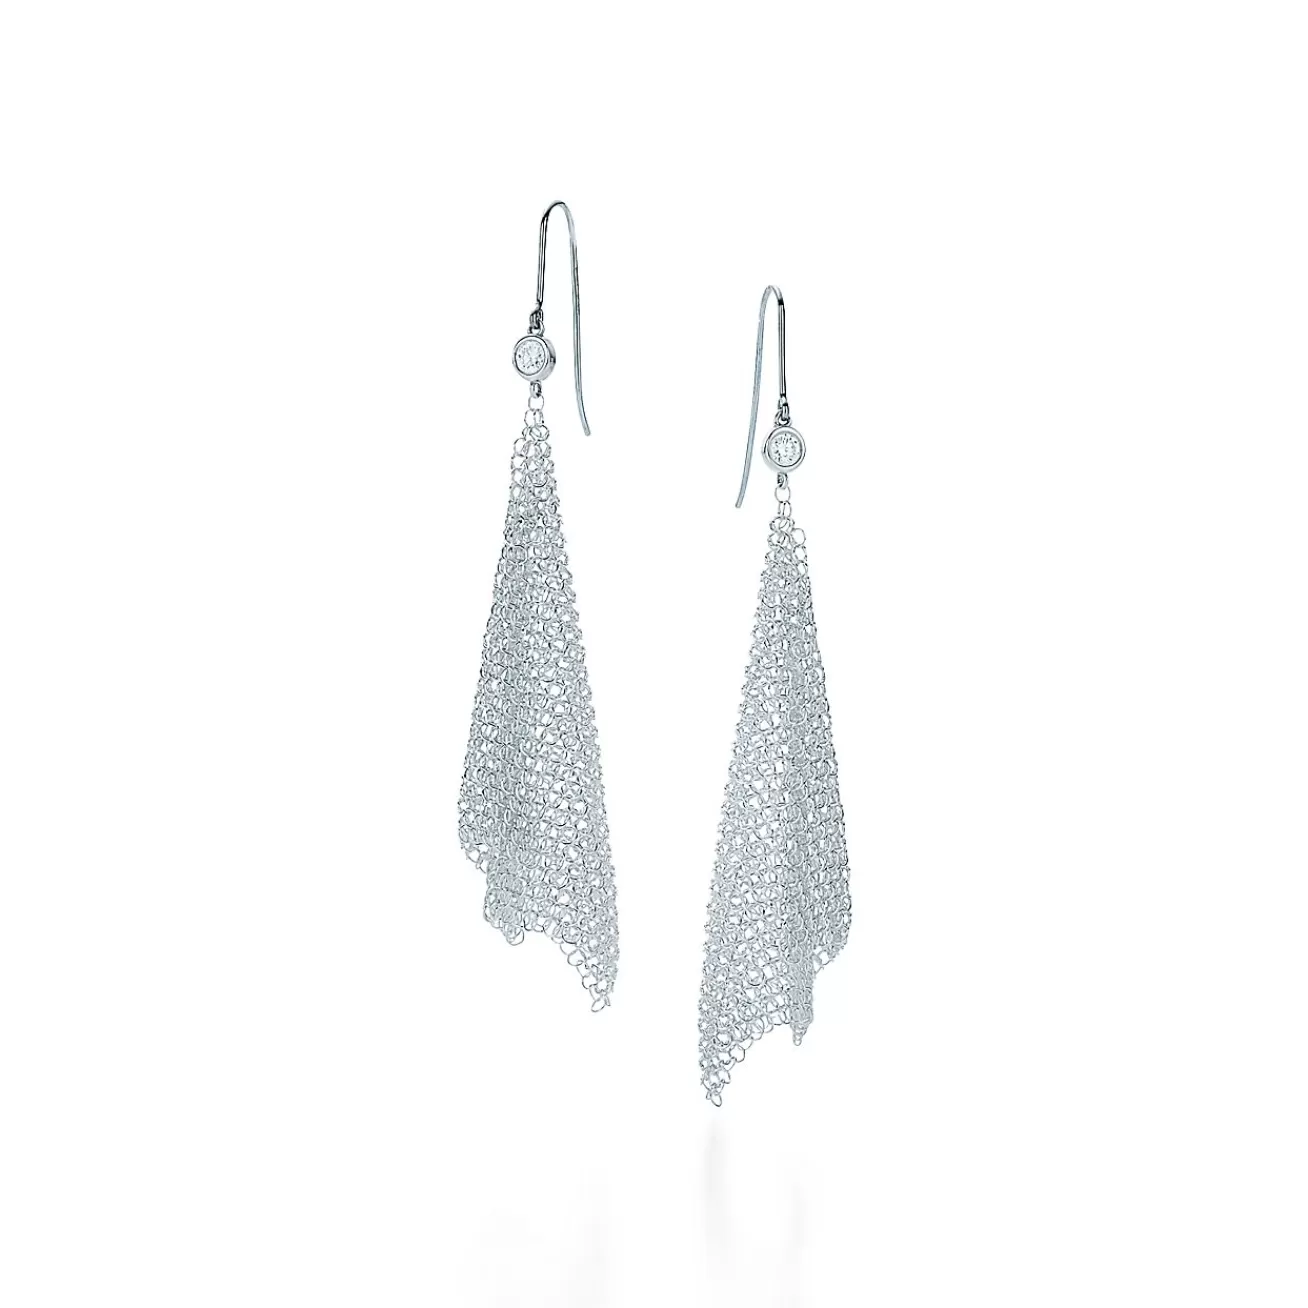 Tiffany & Co. Elsa Peretti® Mesh scarf earrings in sterling silver with diamonds, small. | ^ Earrings | Sterling Silver Jewelry